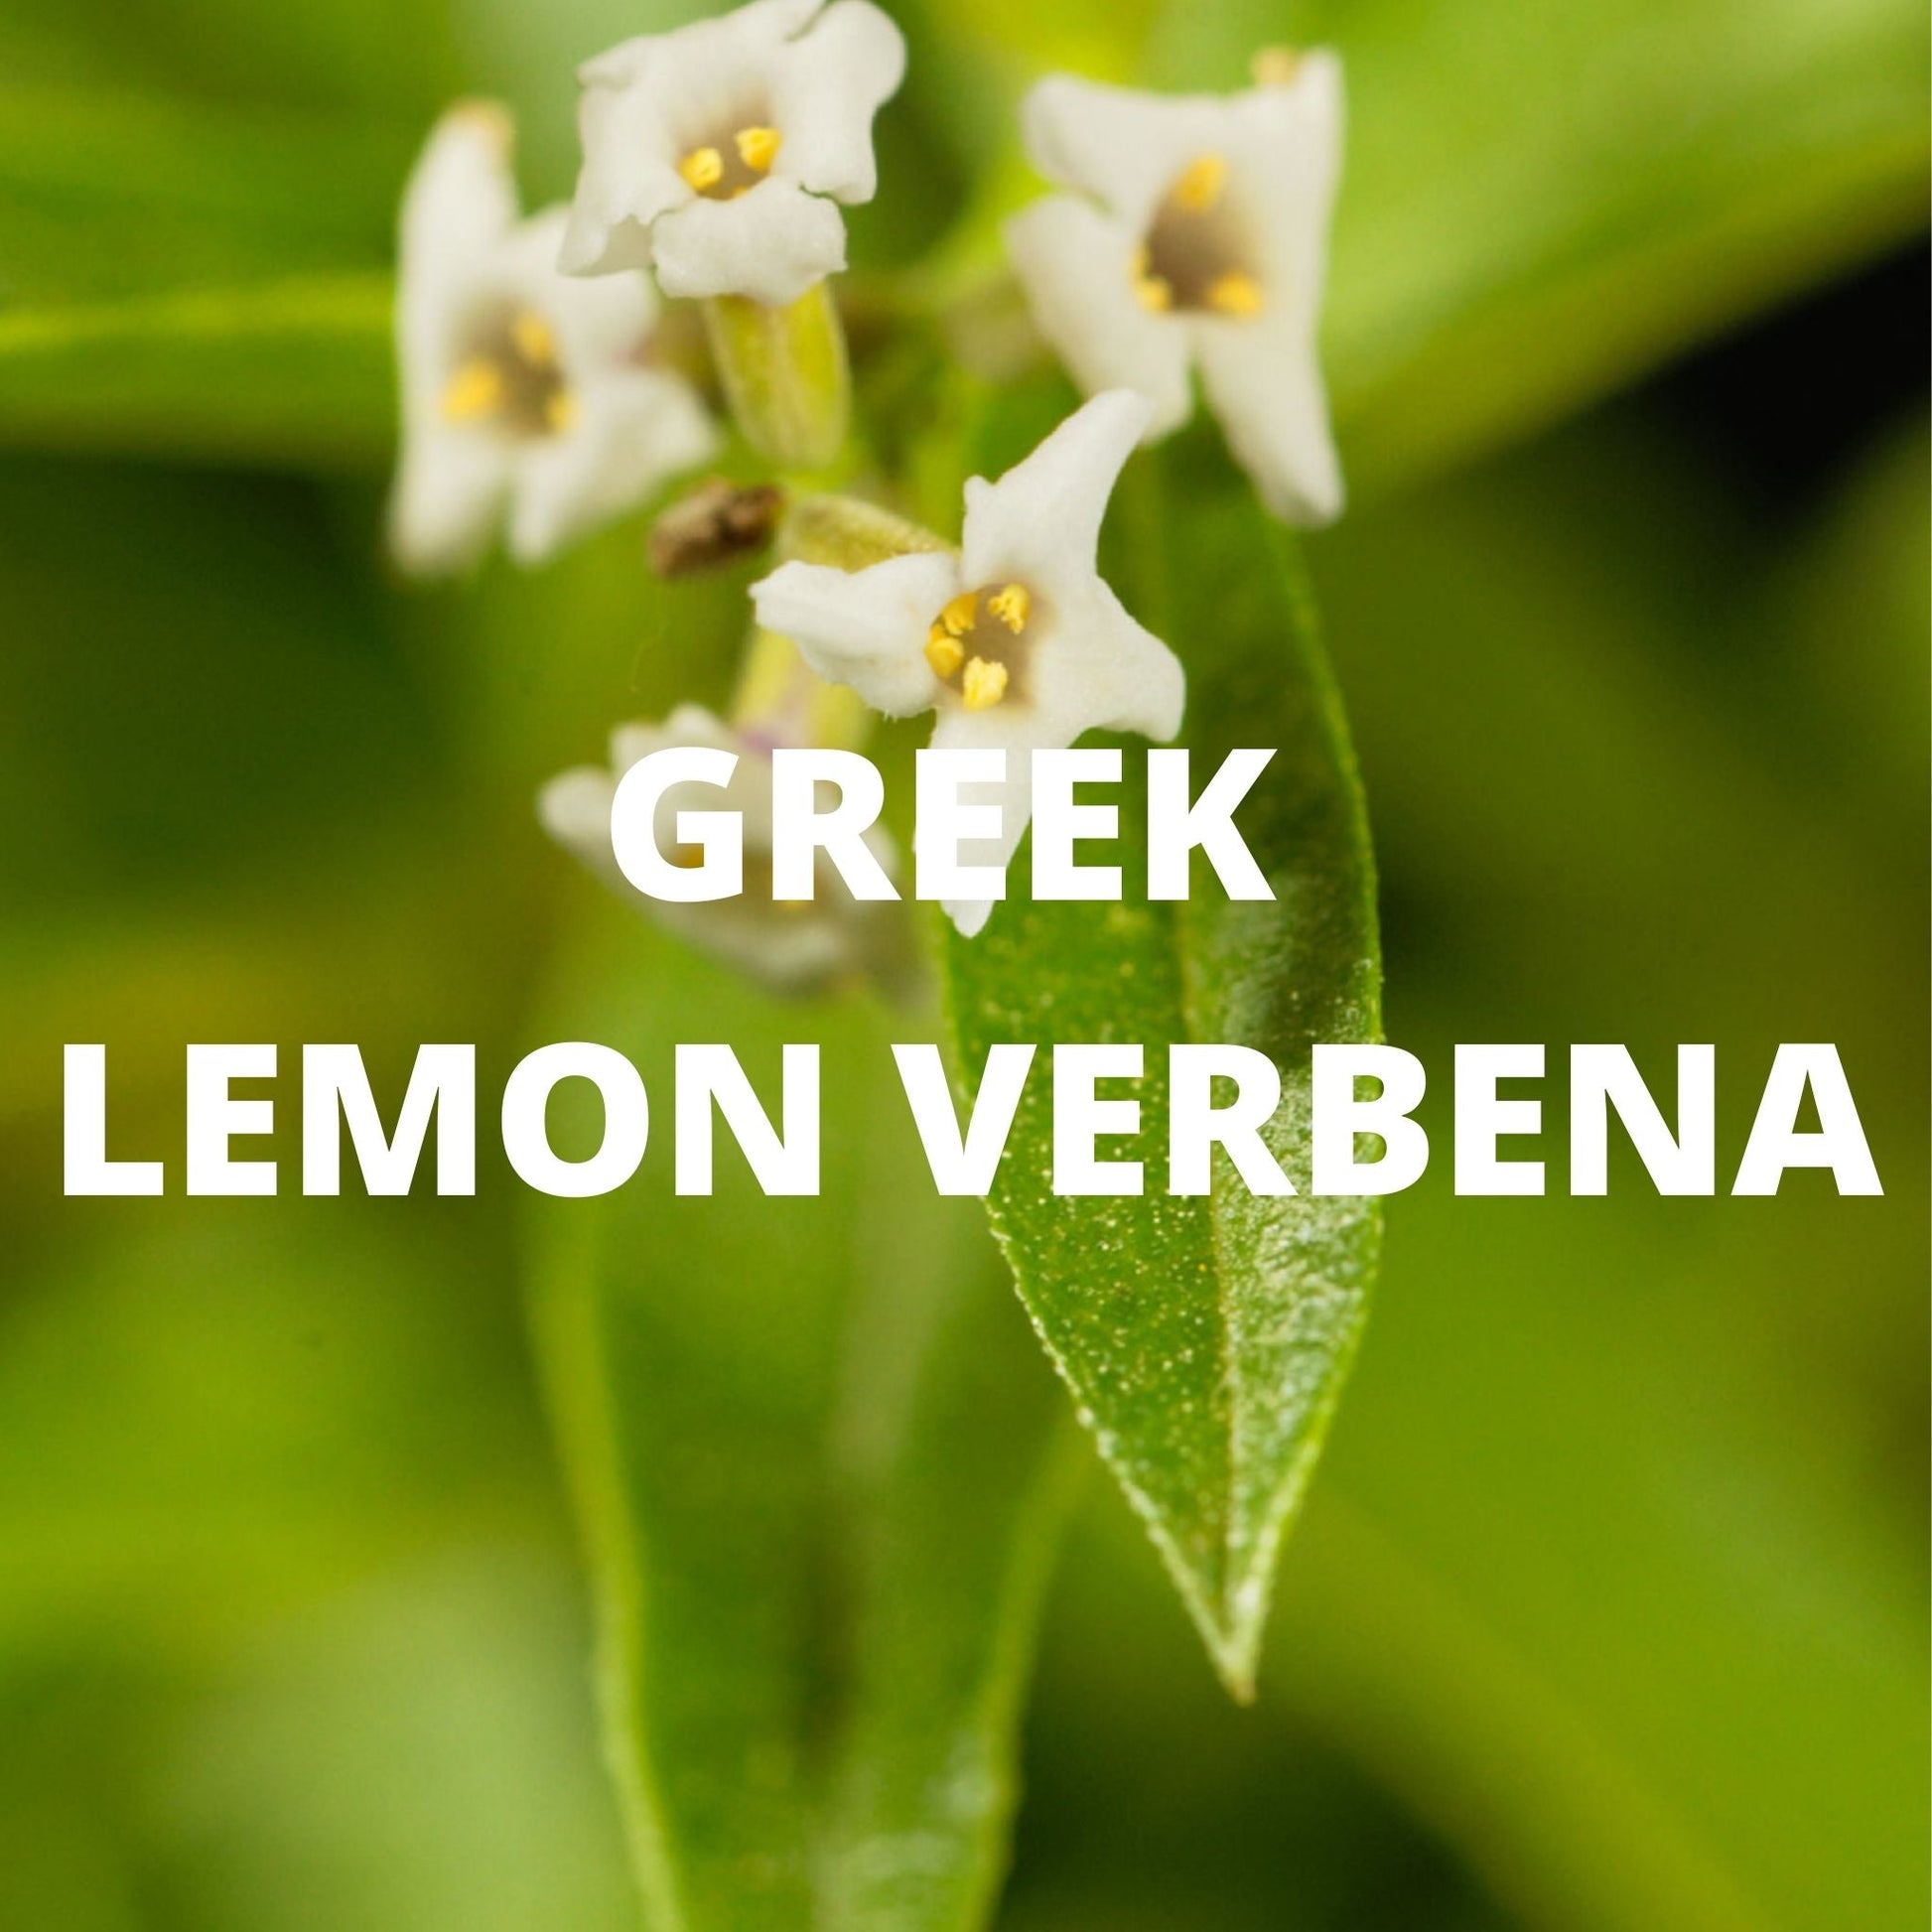 Greek lemon verbena